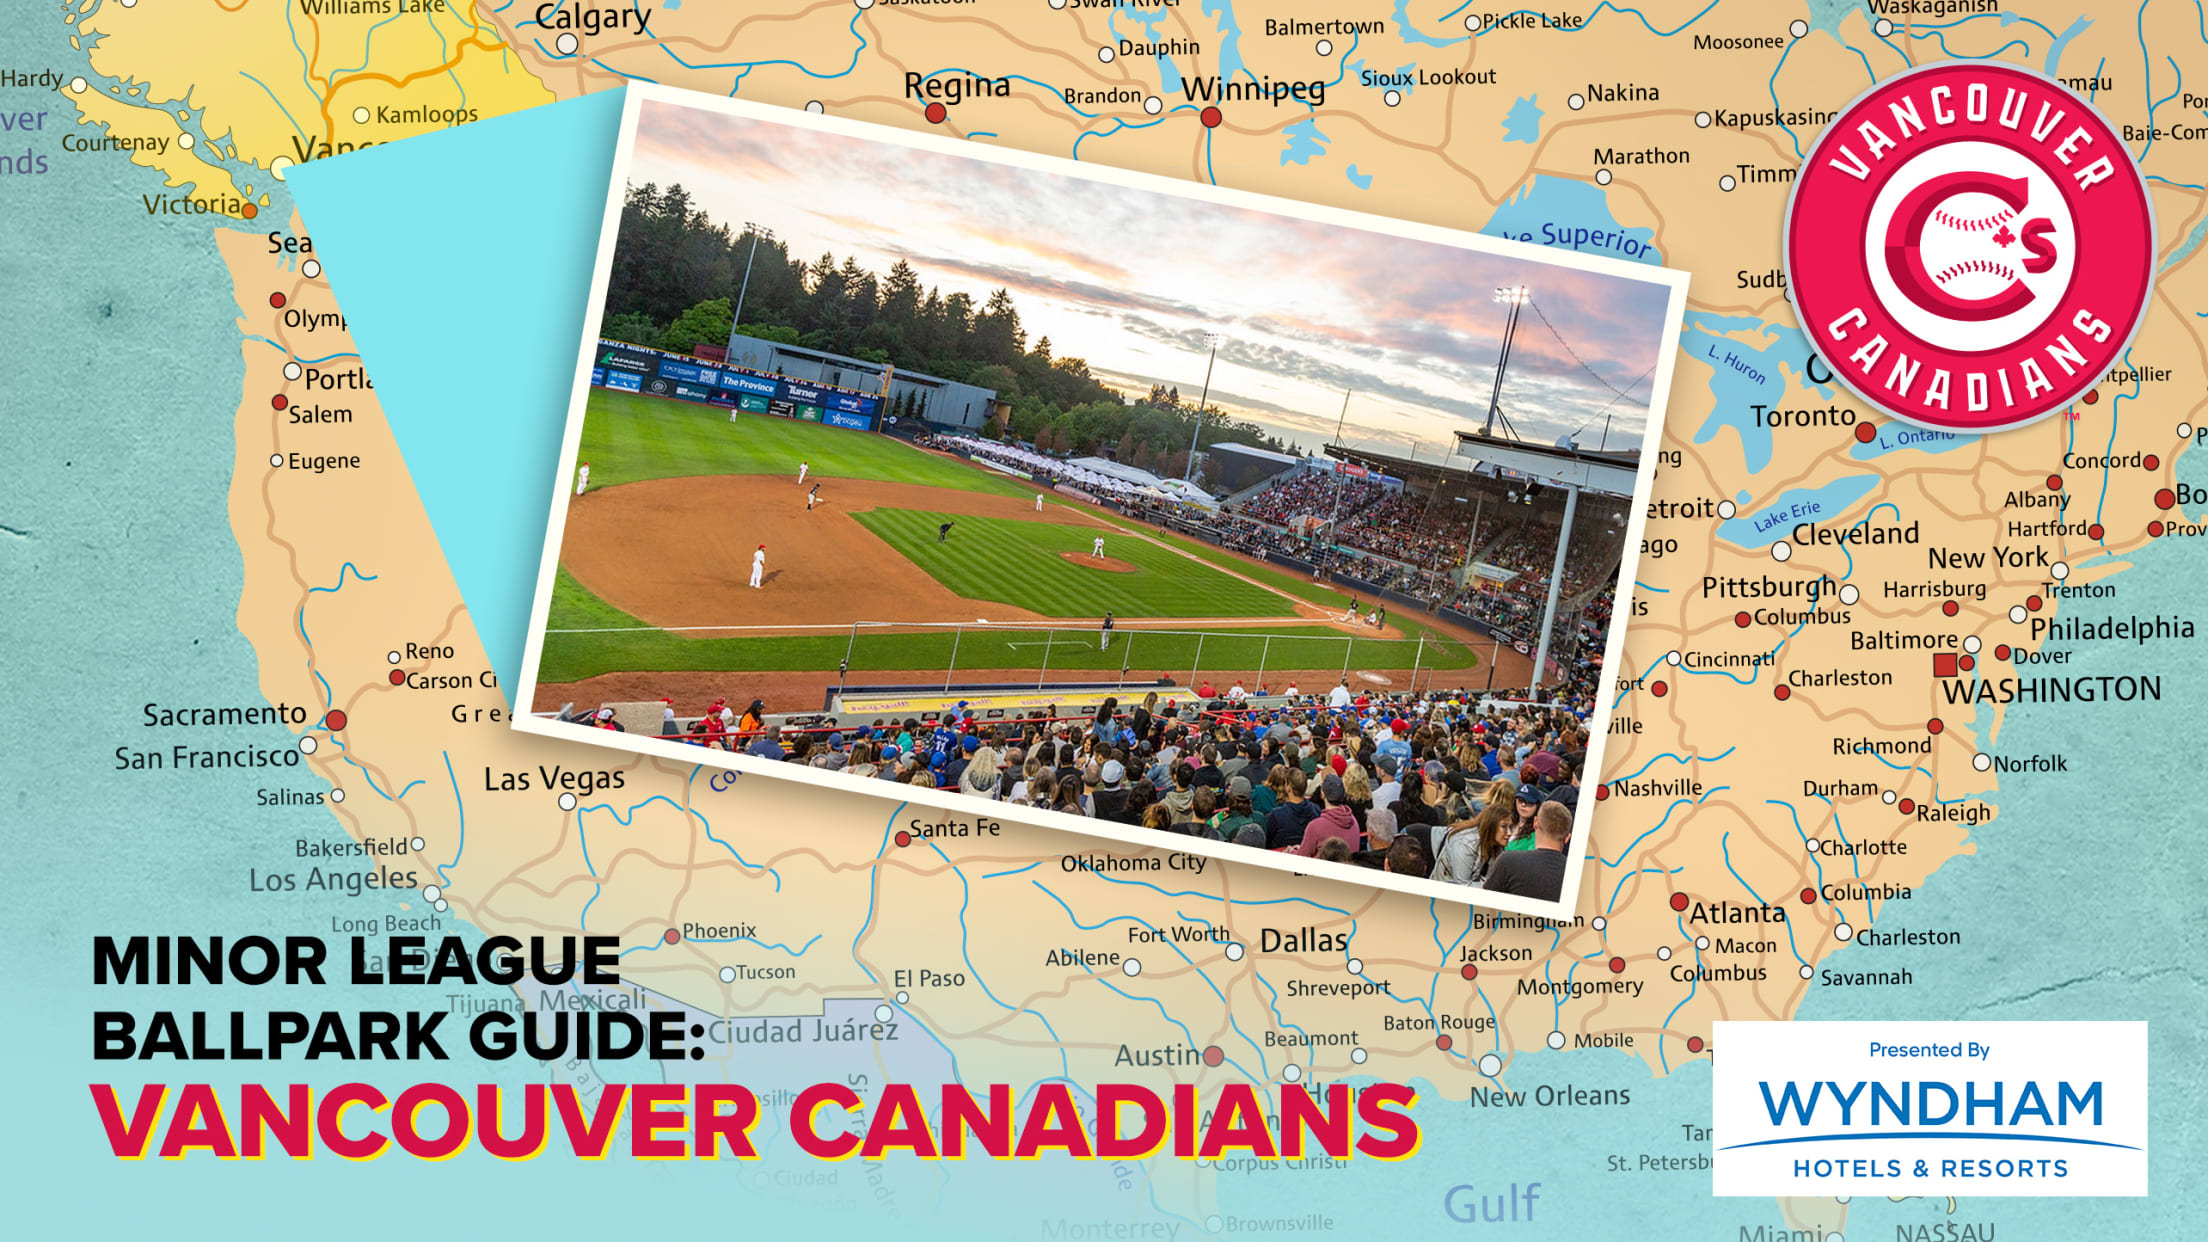 2568x1445-Stadium_Map_Vancouver_Canadians